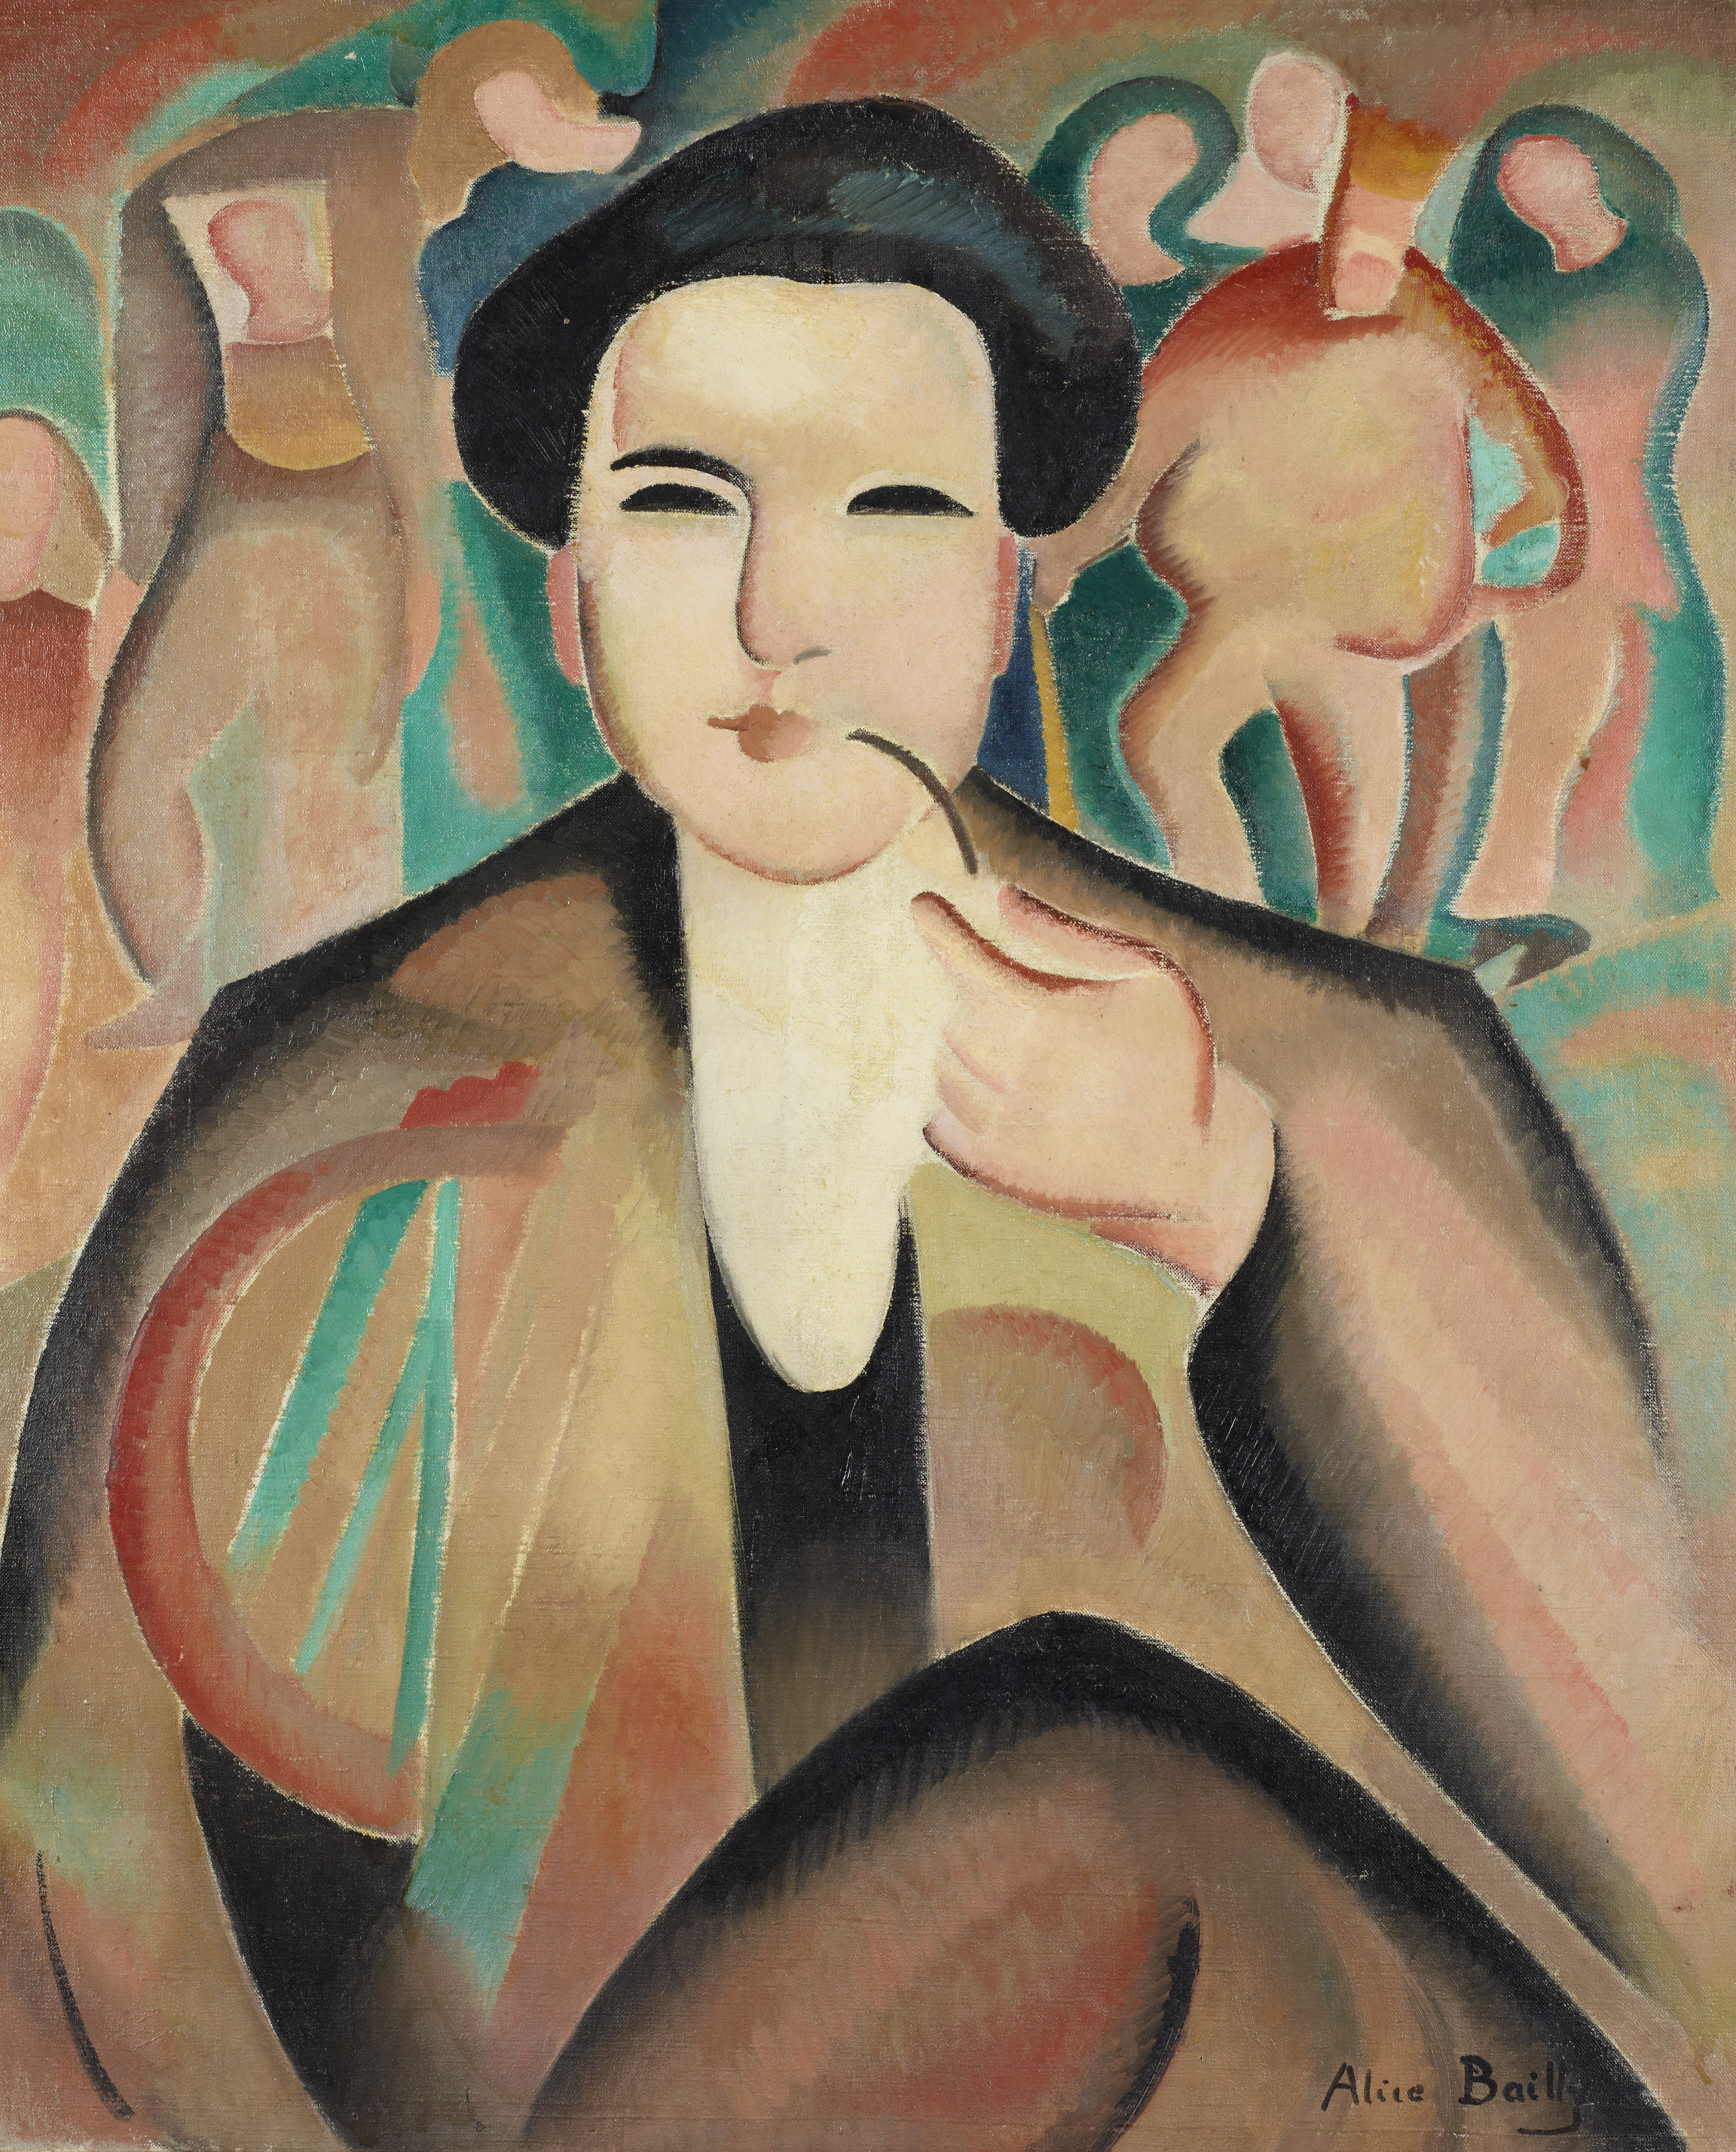 Alice Bailly, Portrait d’Arthur Honegger au « Roi David » (Portrait of Arthur Honegger at “King David”), 1921-1922